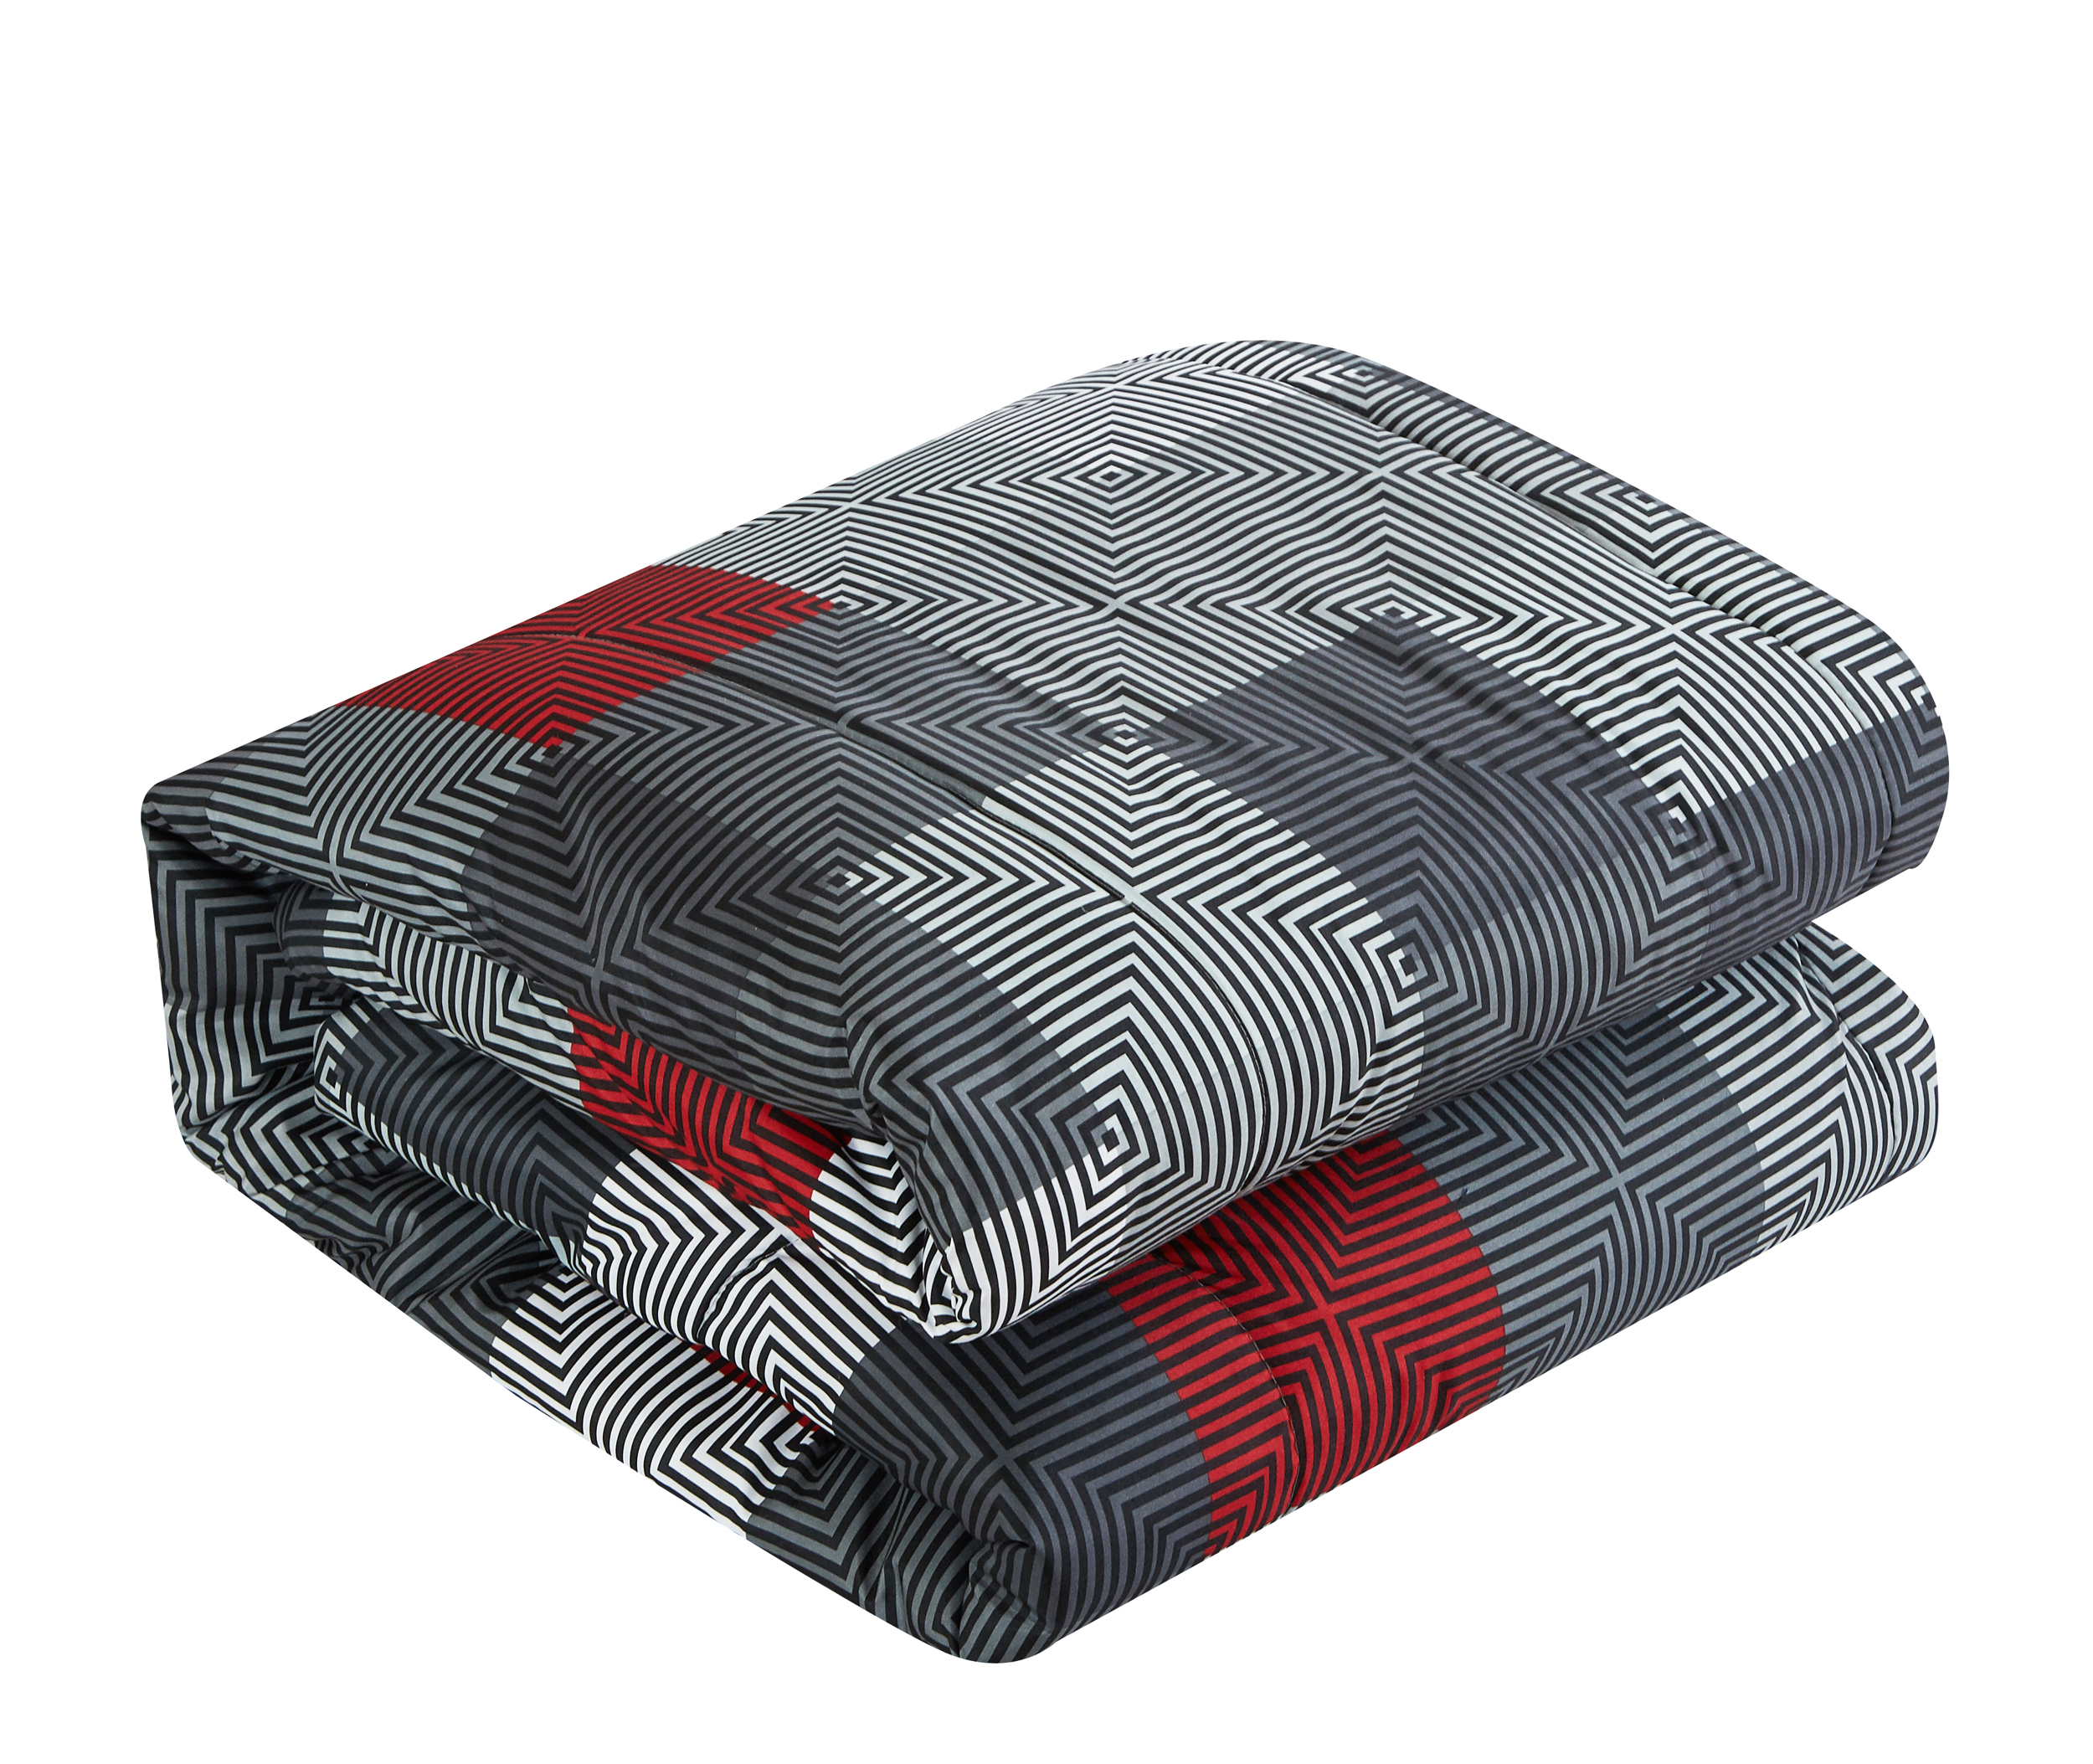 American Original Geo Blocks Bed in a Bag Bedding Comforter Set, Twin - image 5 of 5